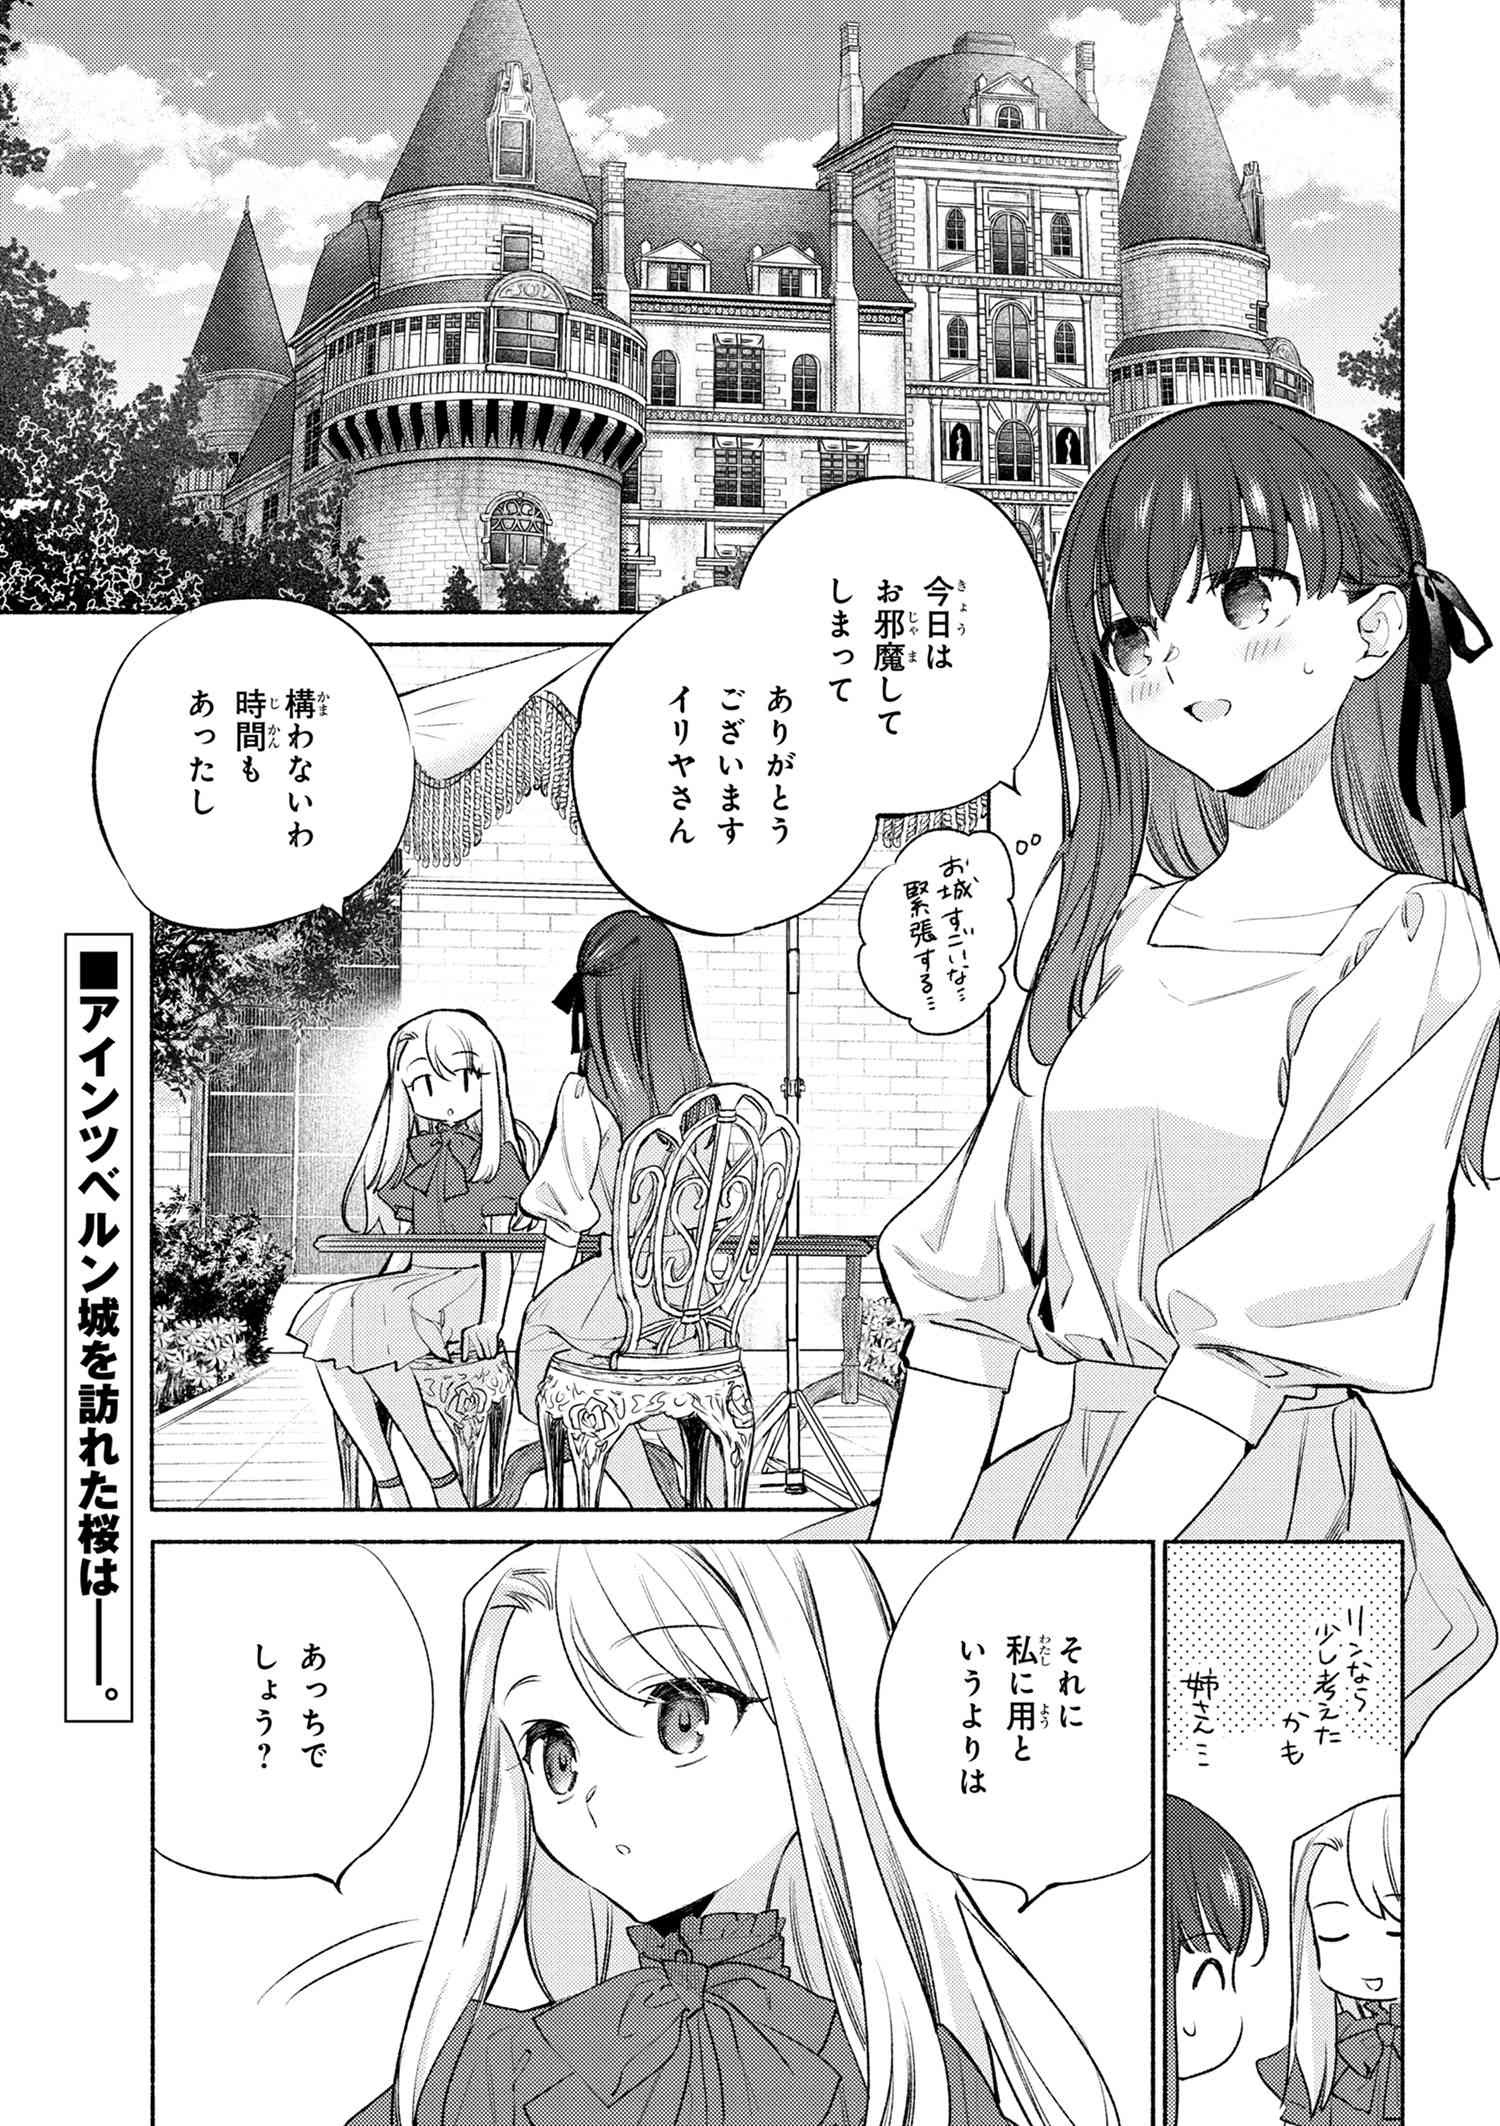 Emiya-san Chi no Kyou no Gohan - Chapter 56 - Page 1